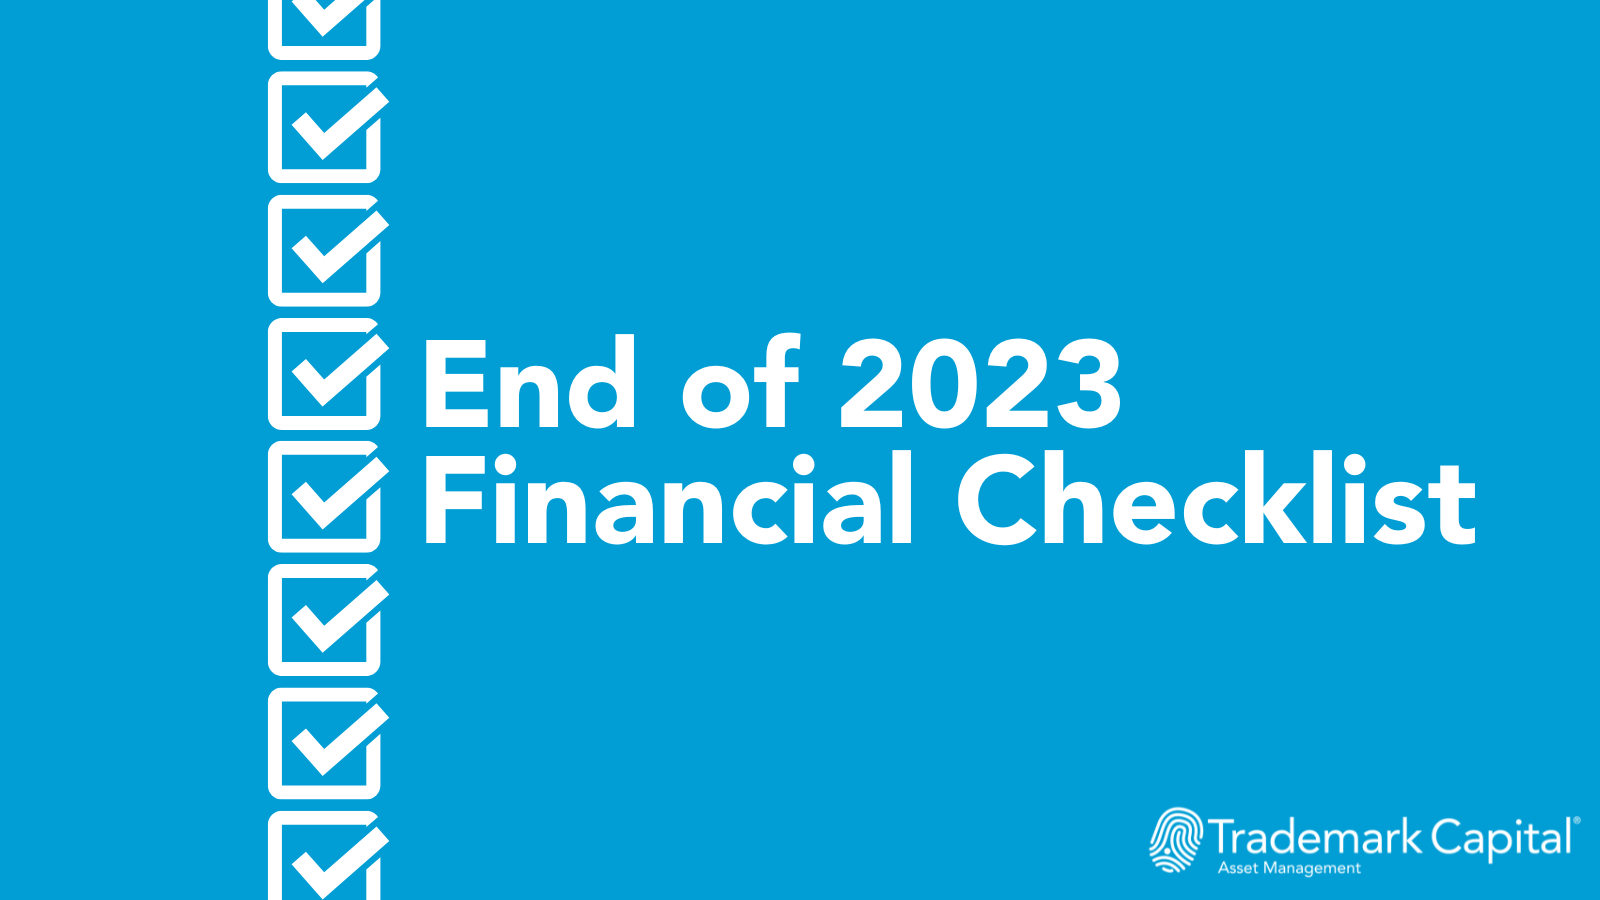 End of 2023 Financial Checklist